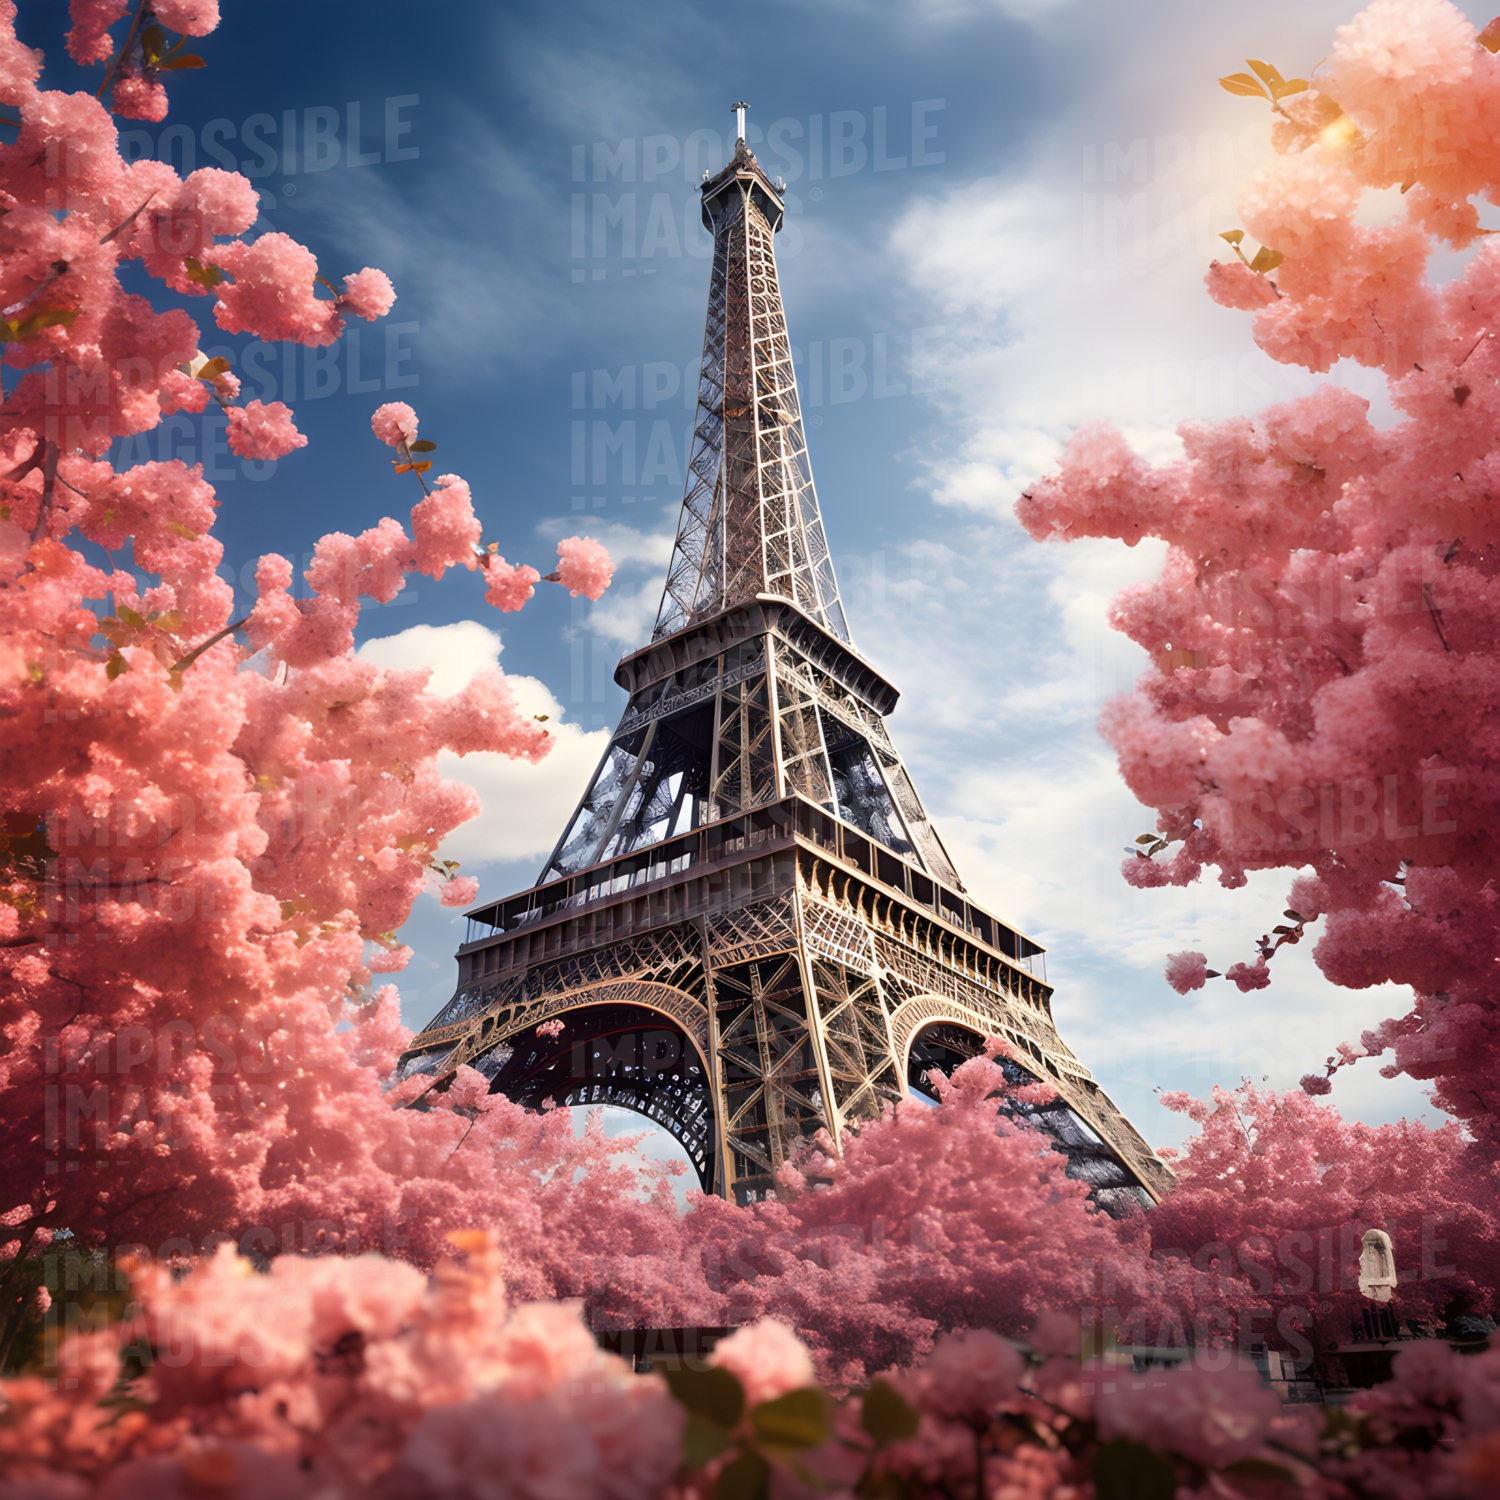 Blossom season in Paris